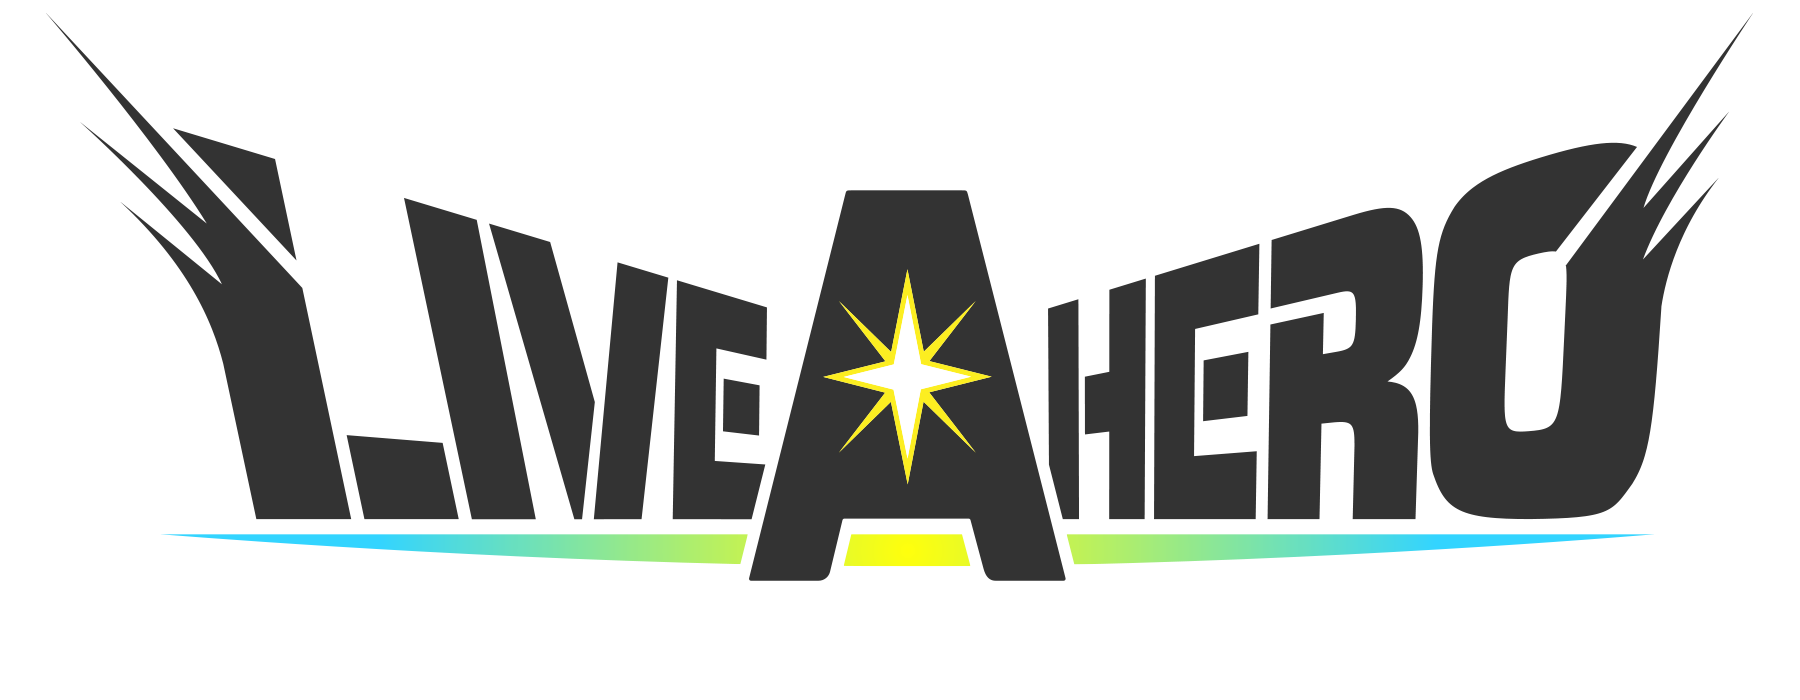 LIVE A HERO Logo.png